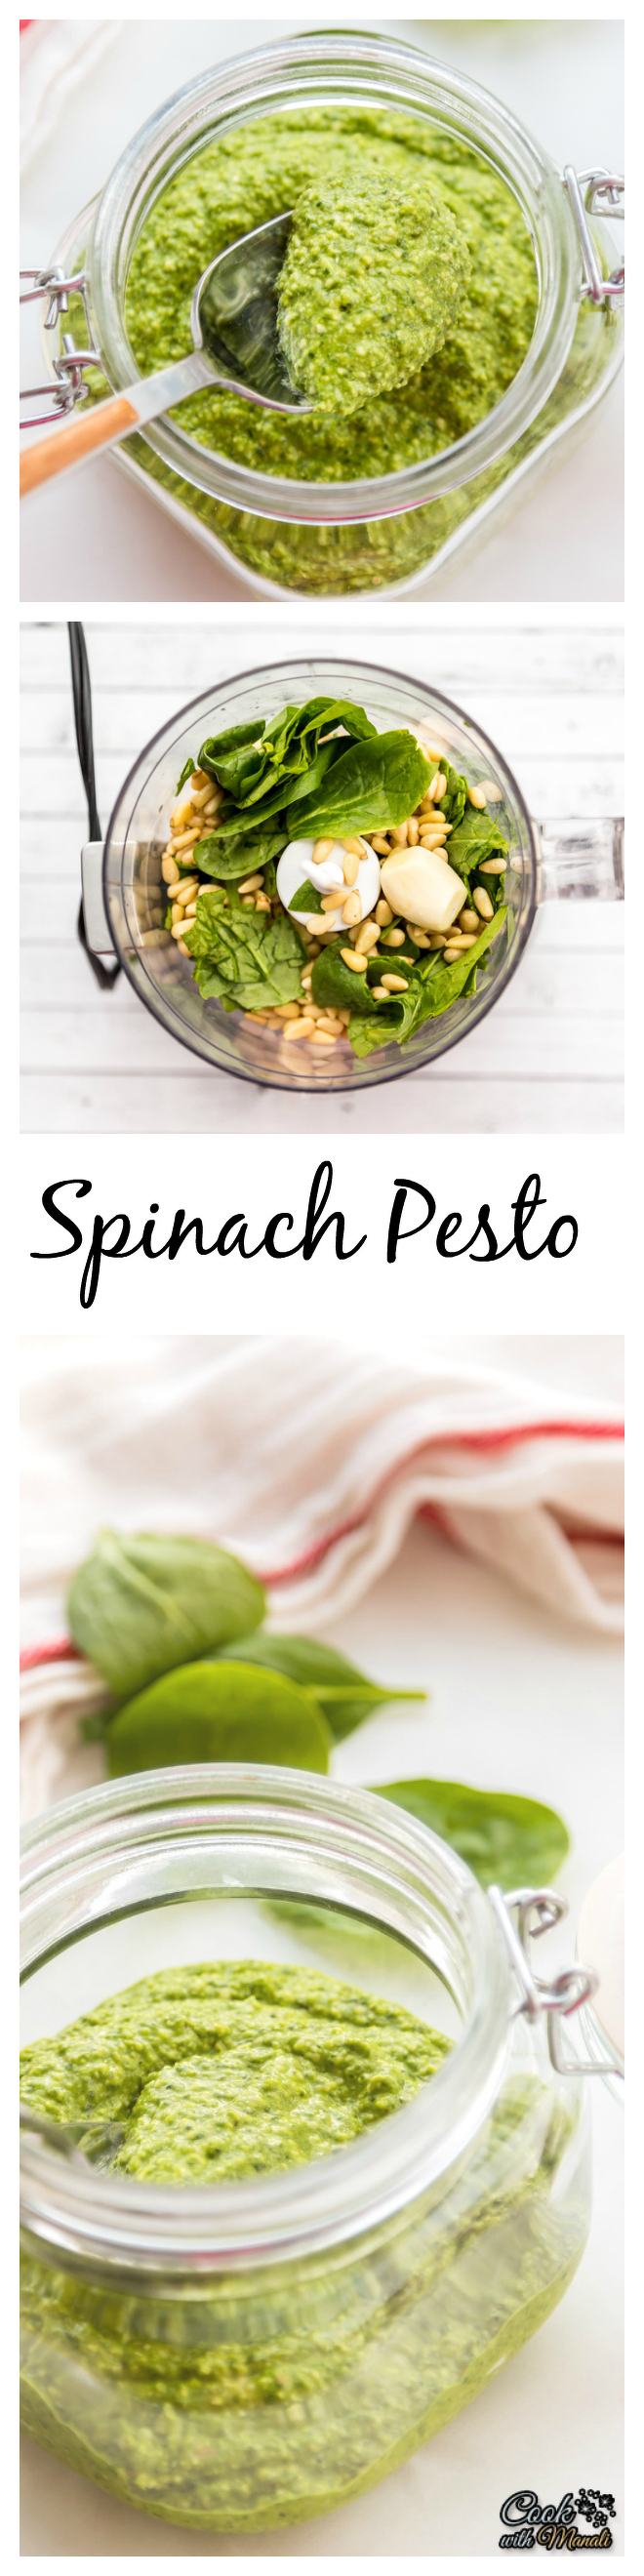 Spinach Pesto Collage-nocwm